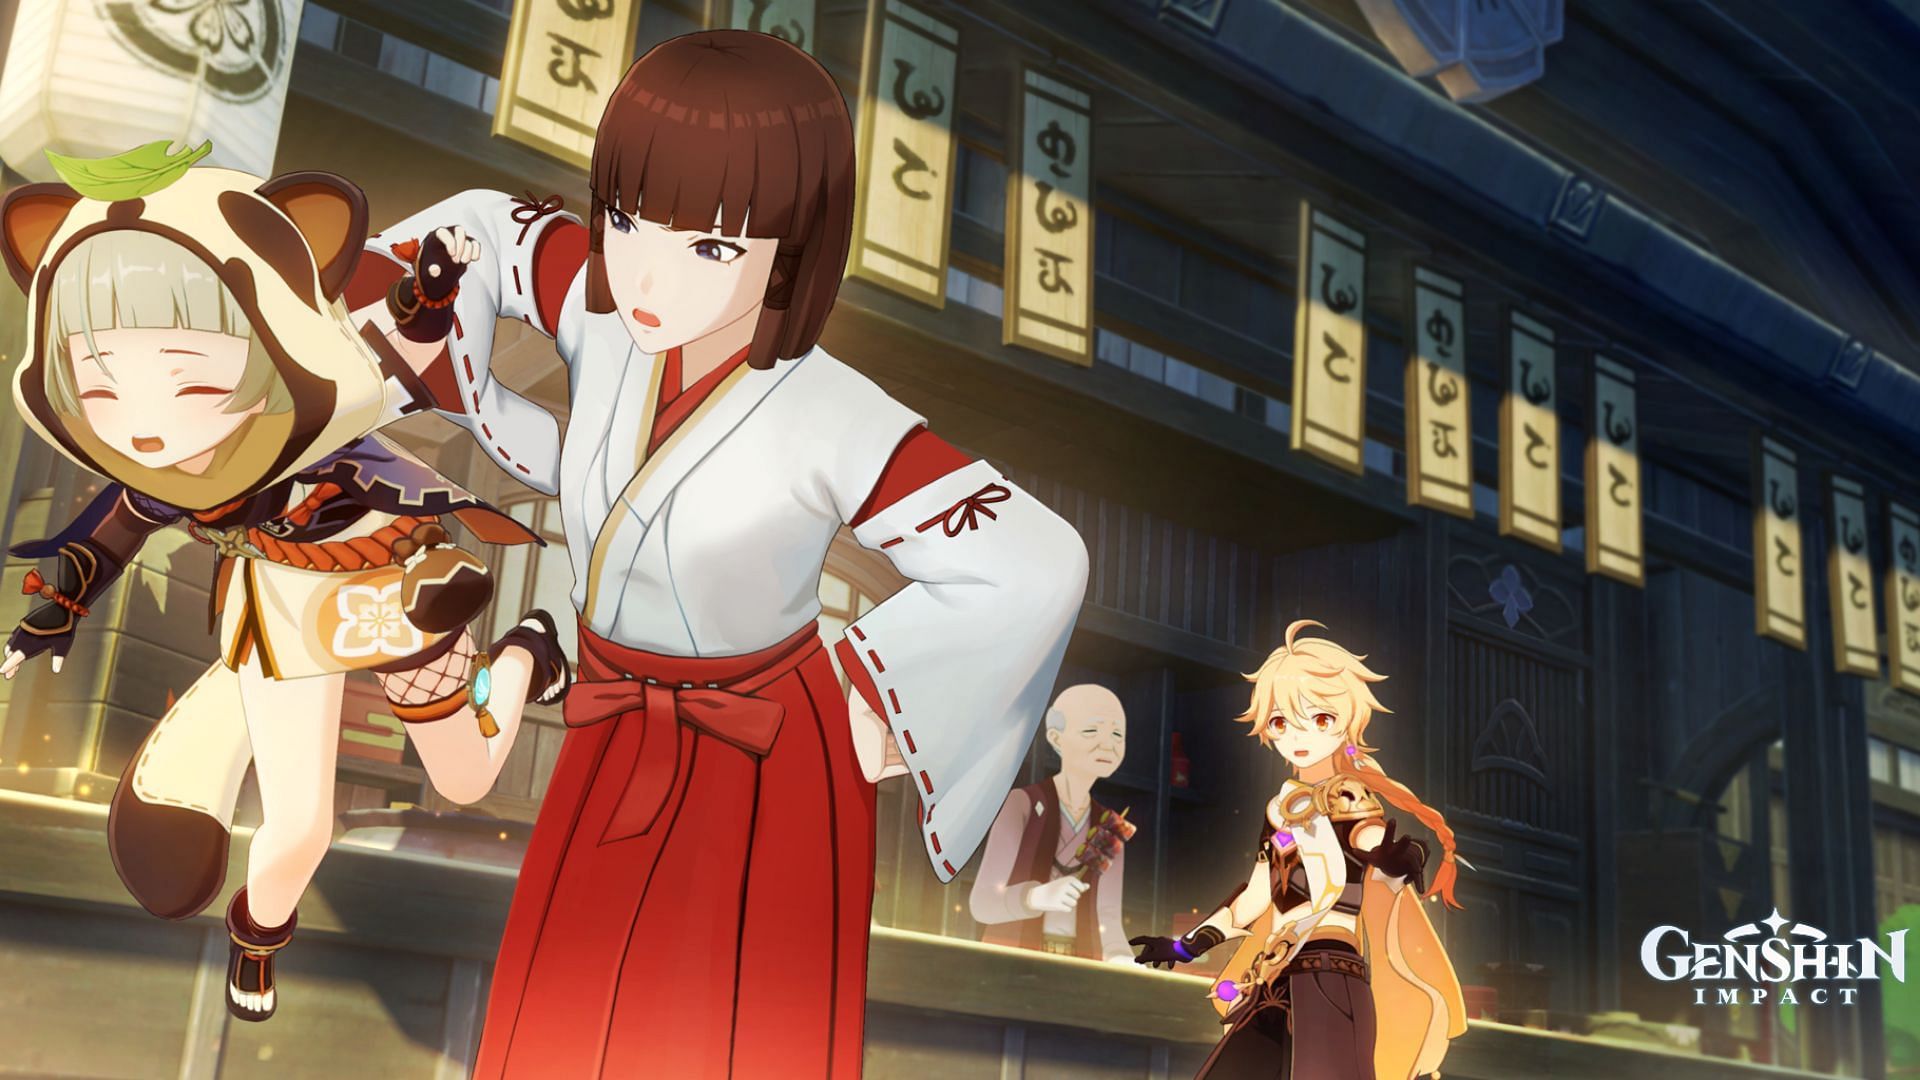 Shrine Maiden catches Sayu (Image via Genshin Impact)